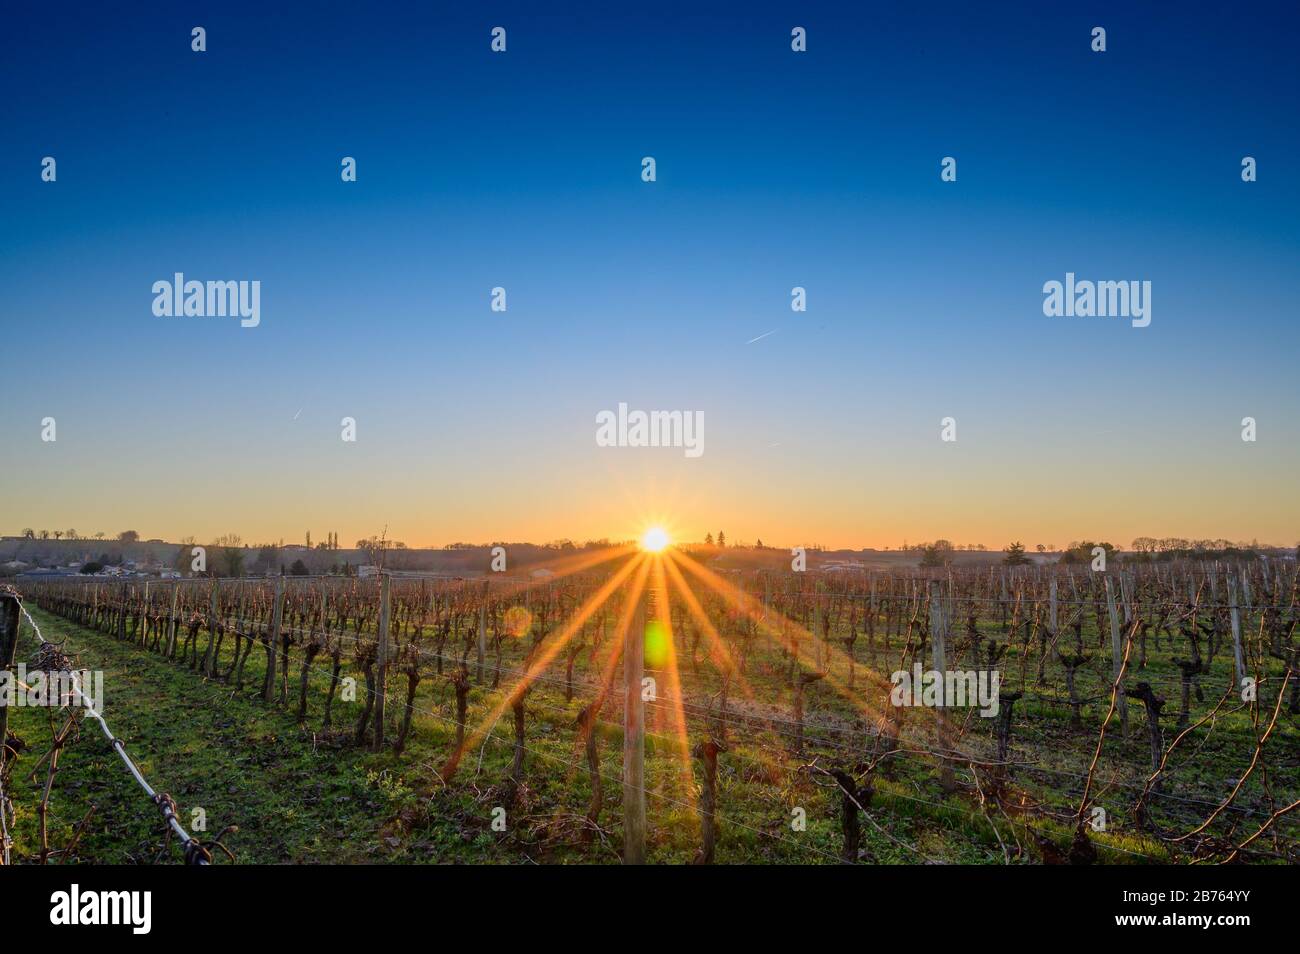 Sunset over vineyard in winter Stock Photo